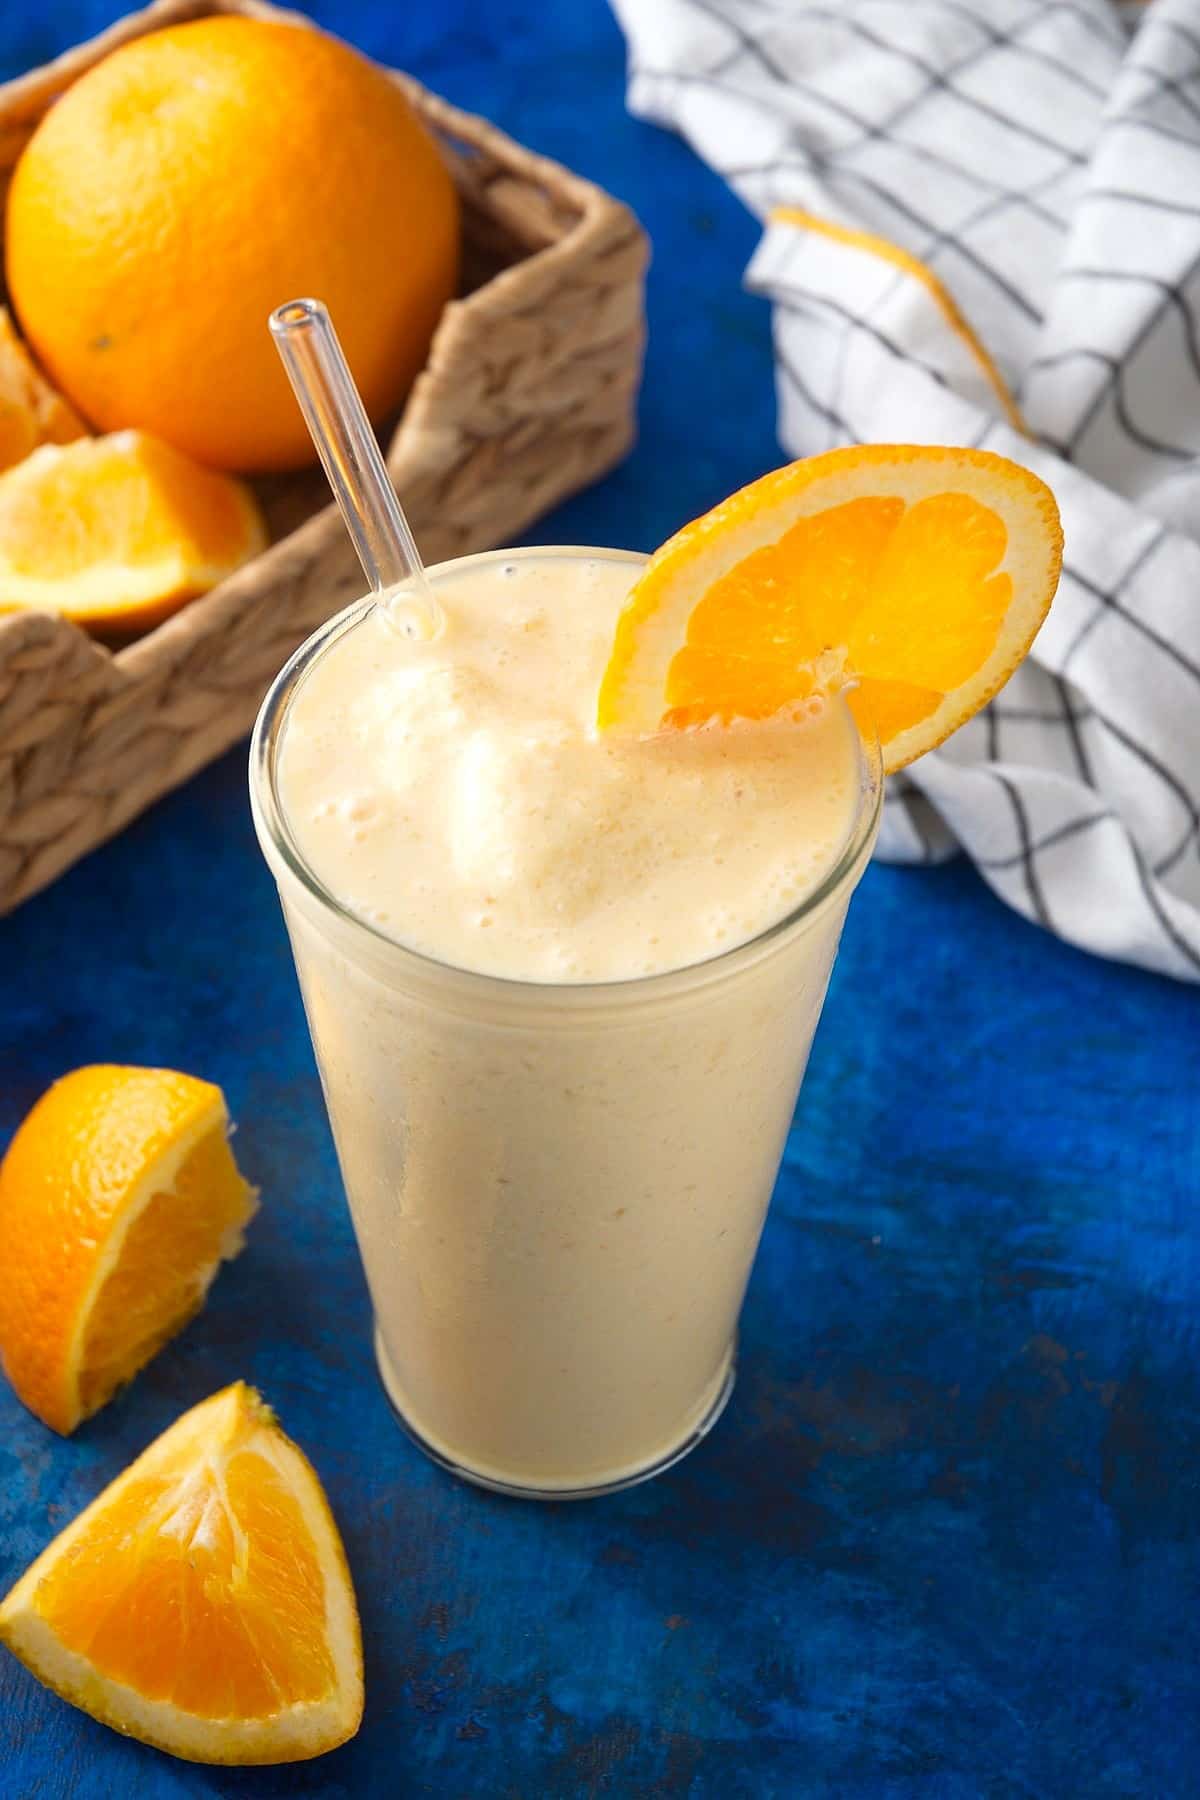 Orange smoothie in glass with orange slice on blue background.